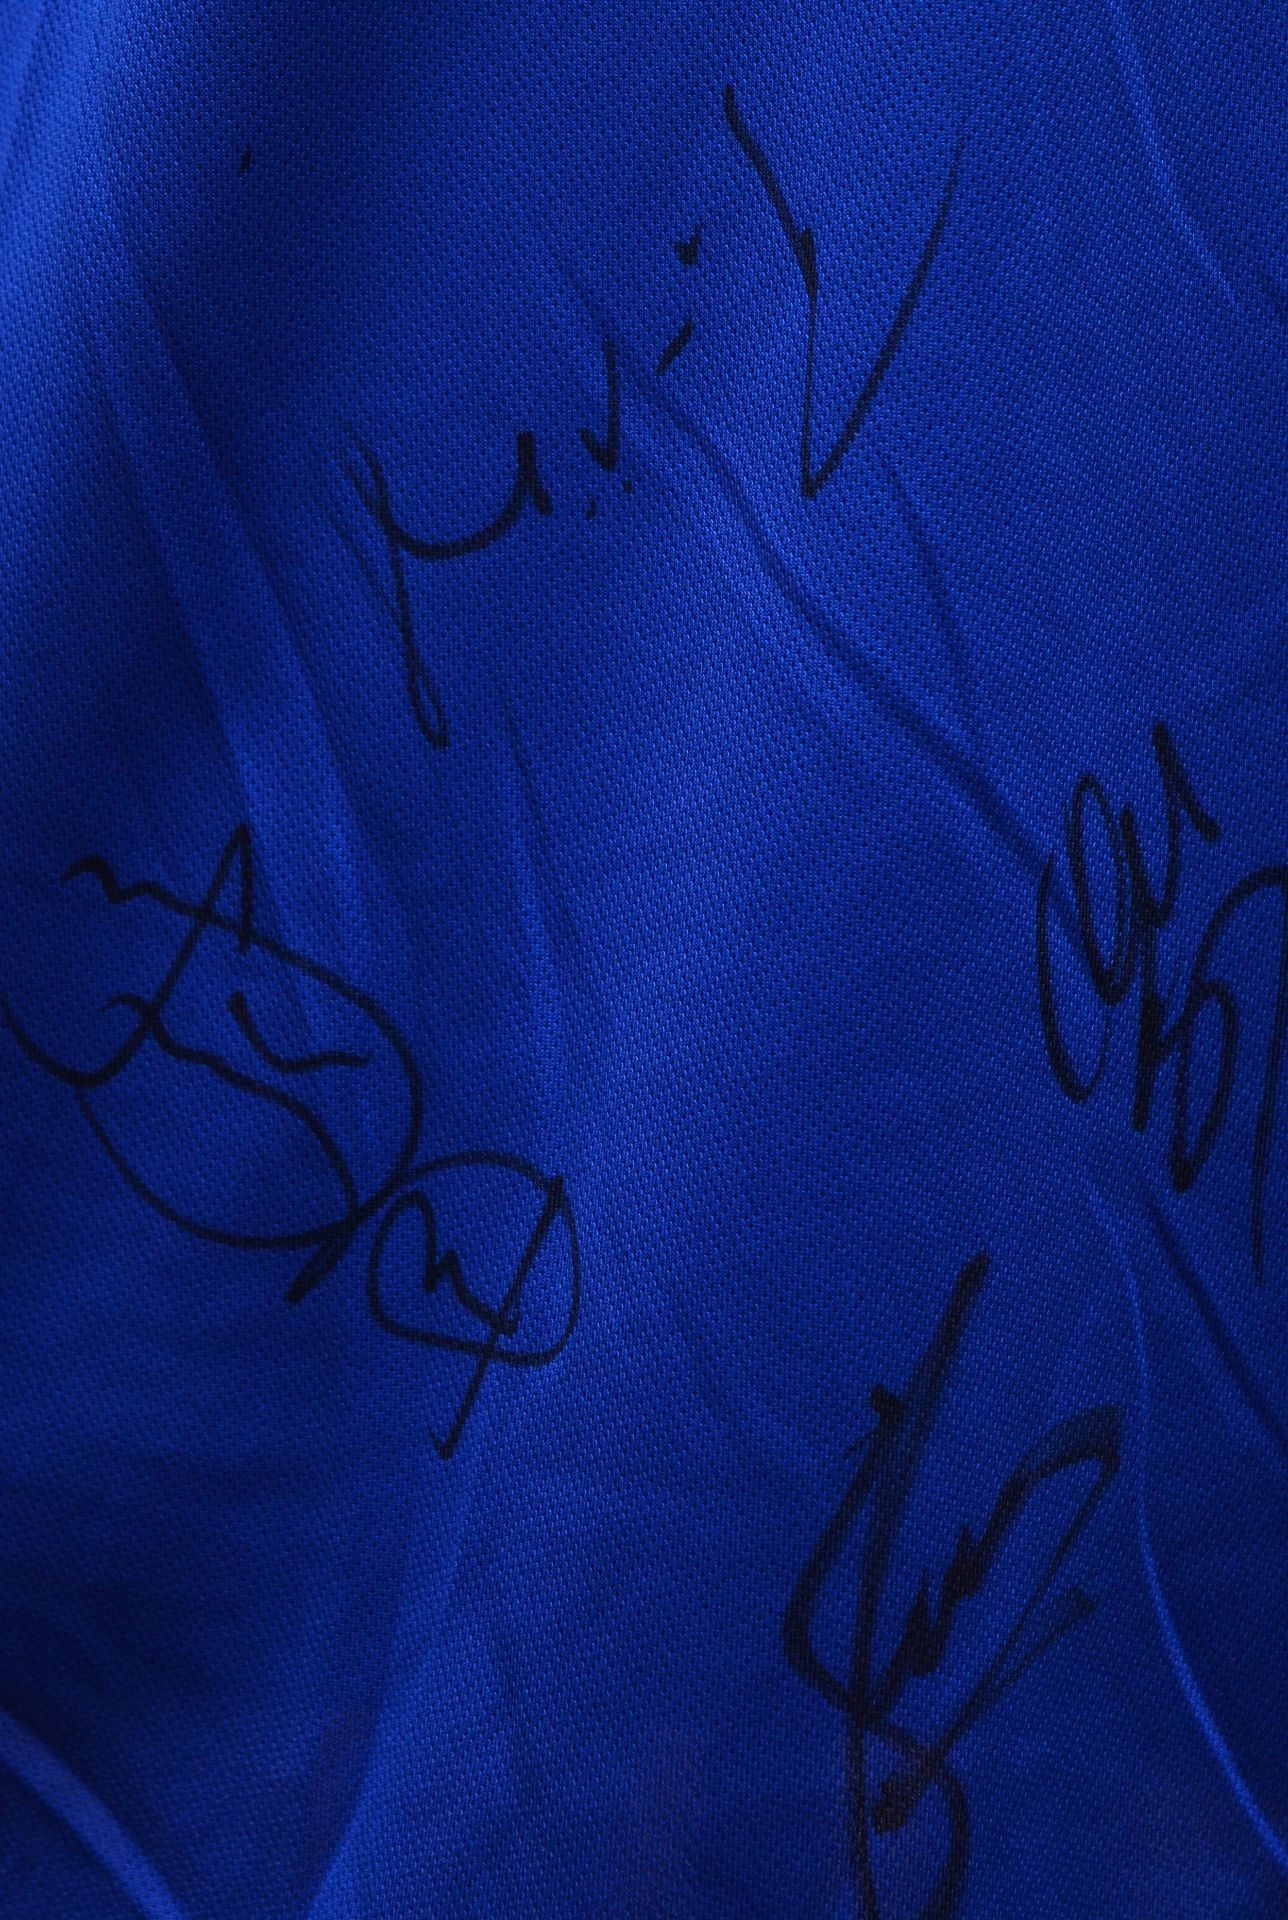 Chelsea Players Signed Shirt 2005-2006 Large Centenary Premier League winning season Jose Mourinho - Image 4 of 7